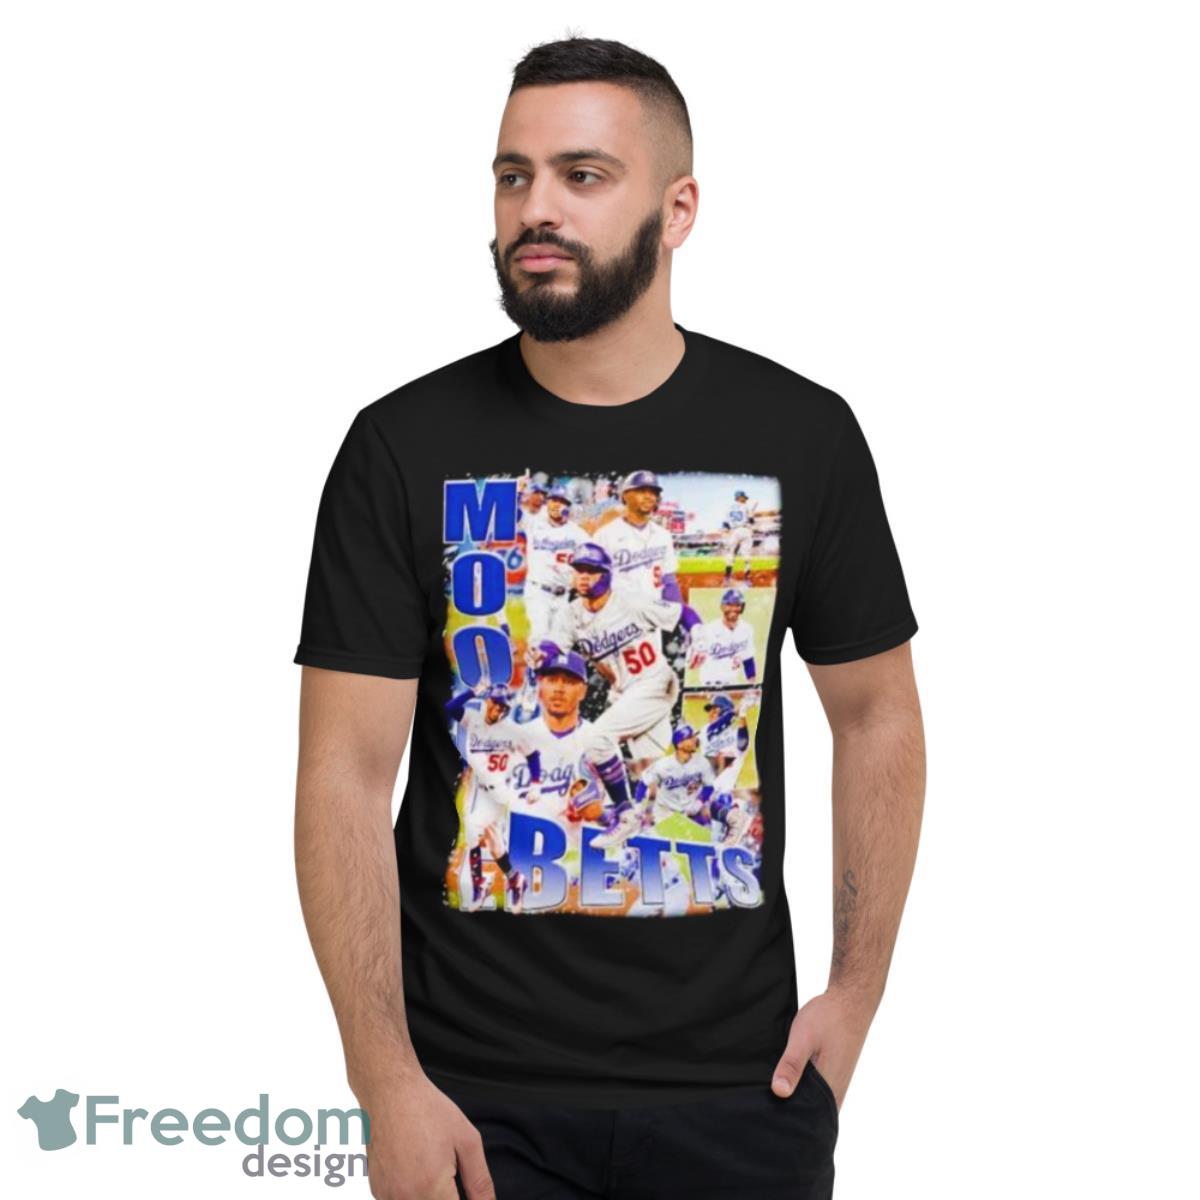 MLB Los Angeles Dodgers (Mookie Betts) Women's T-Shirt.